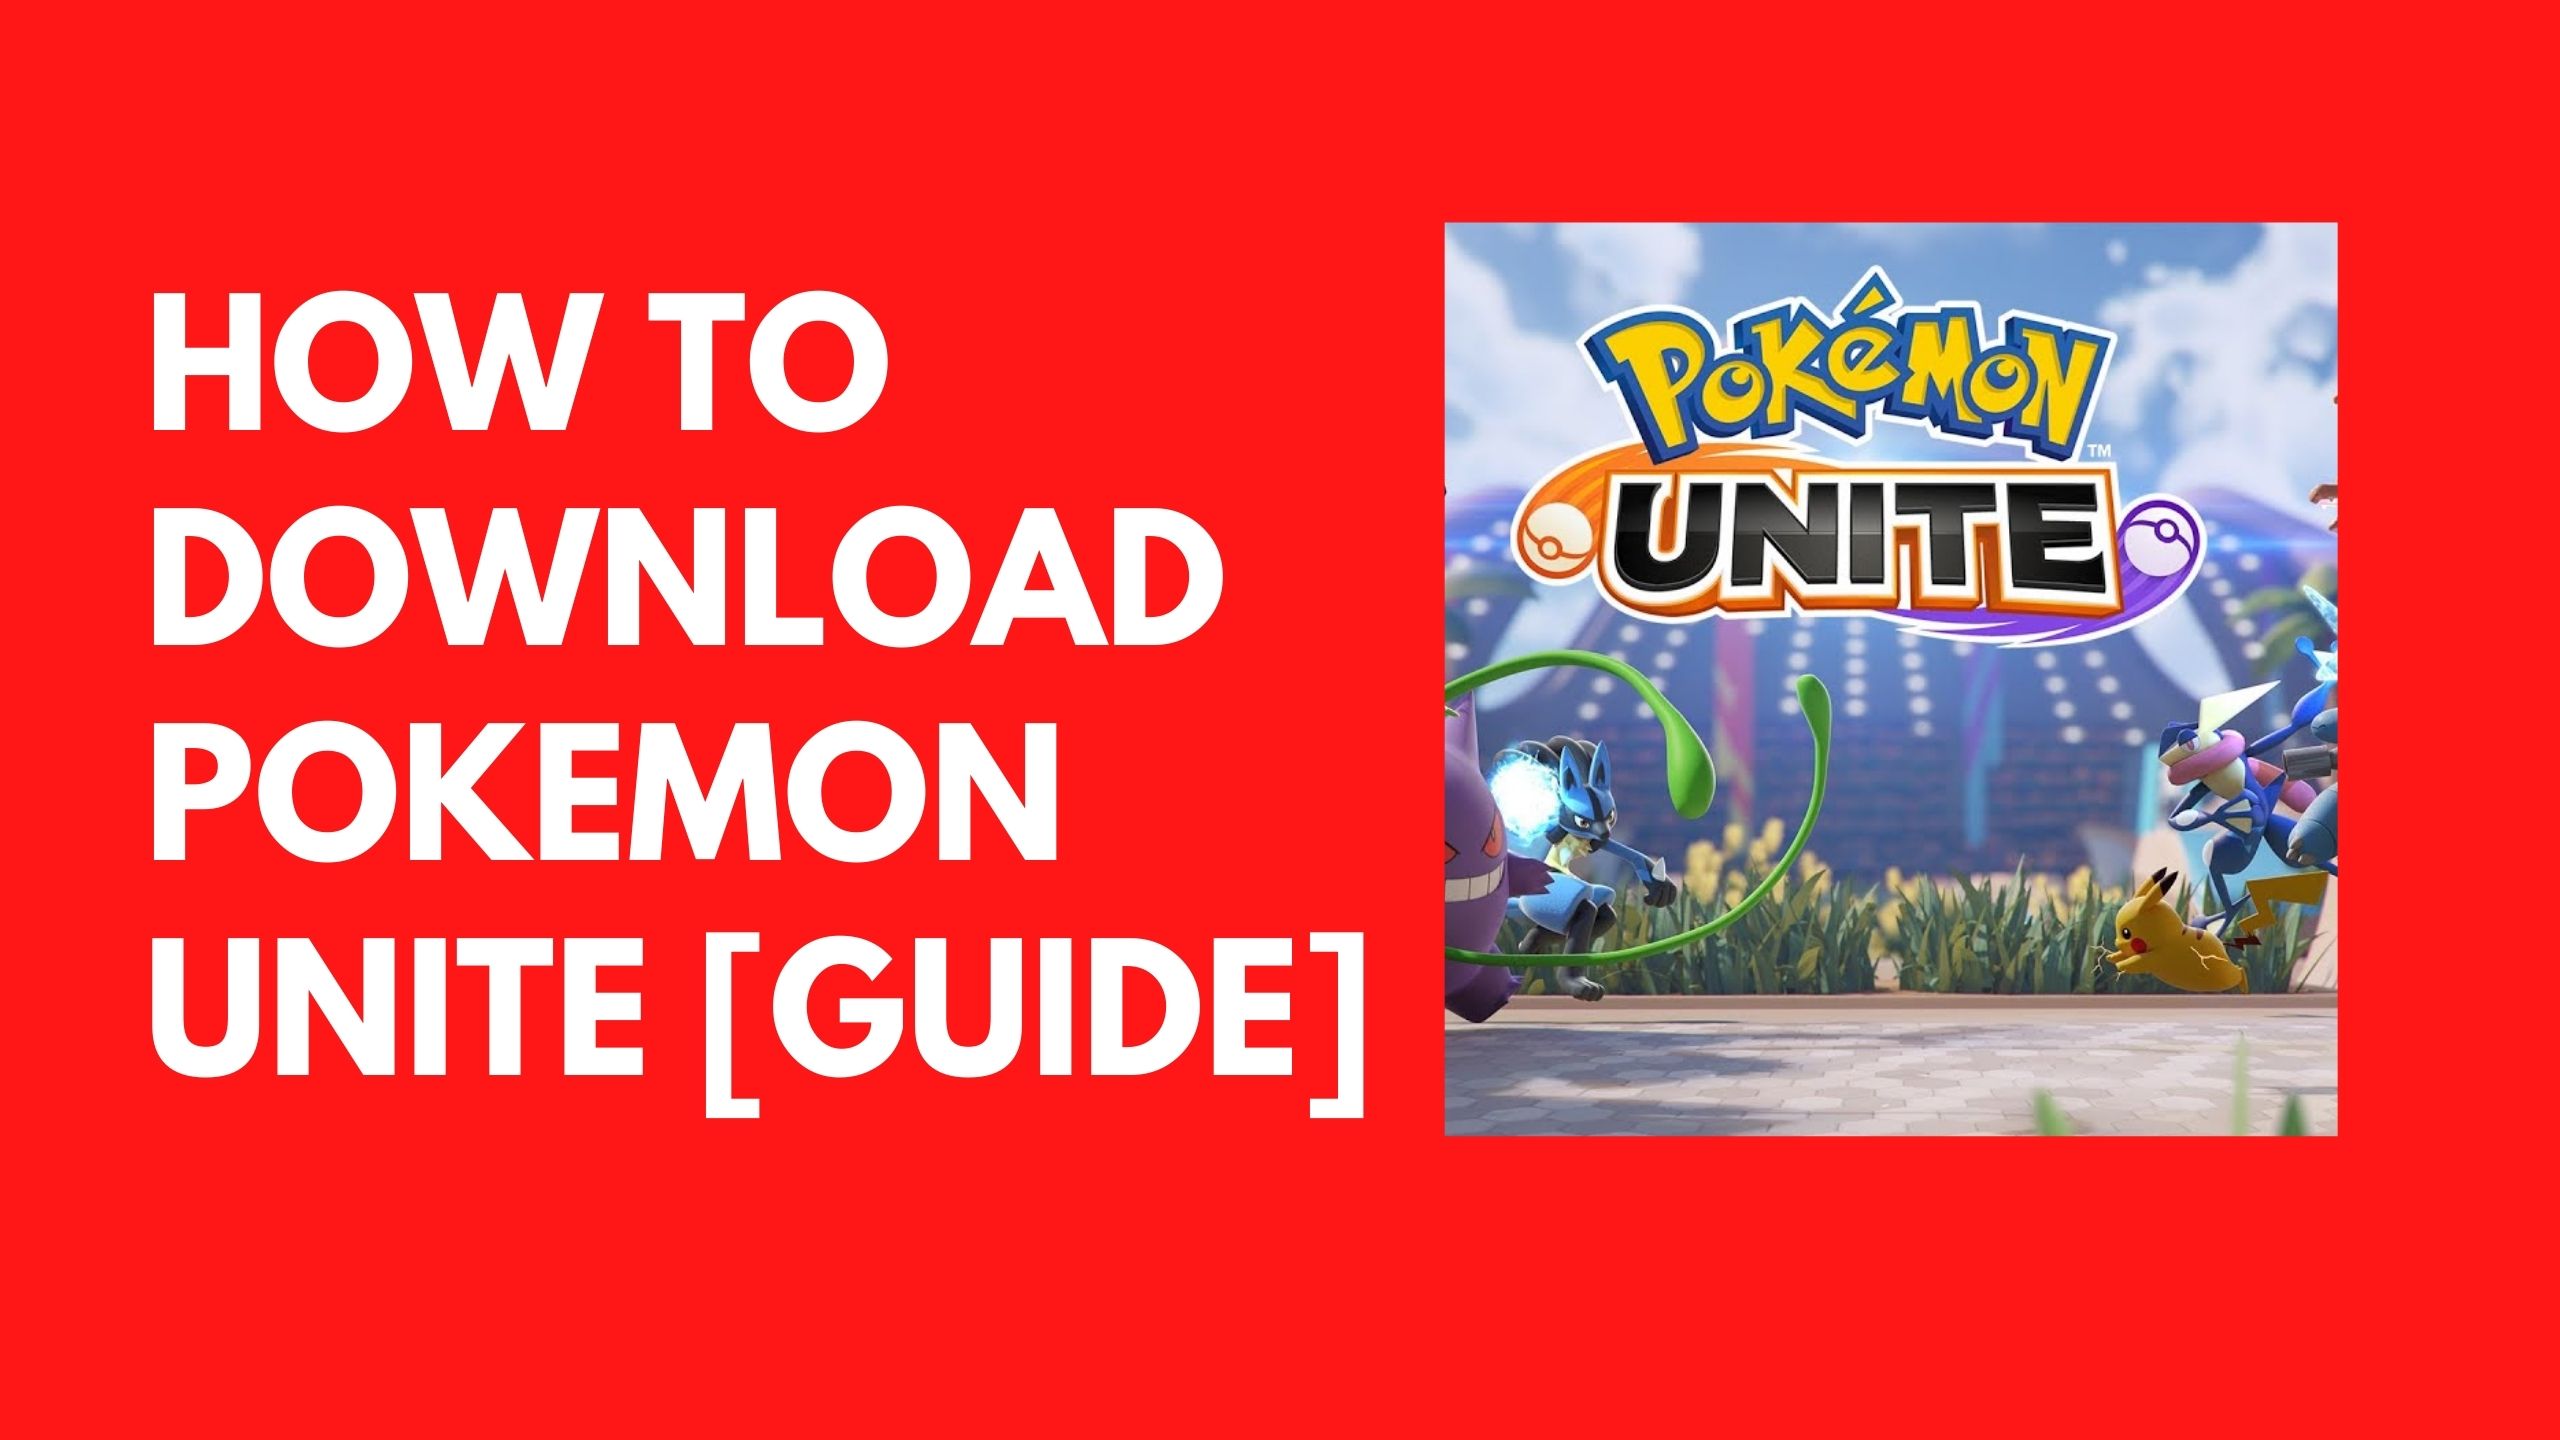 How to download Pokemon Unite